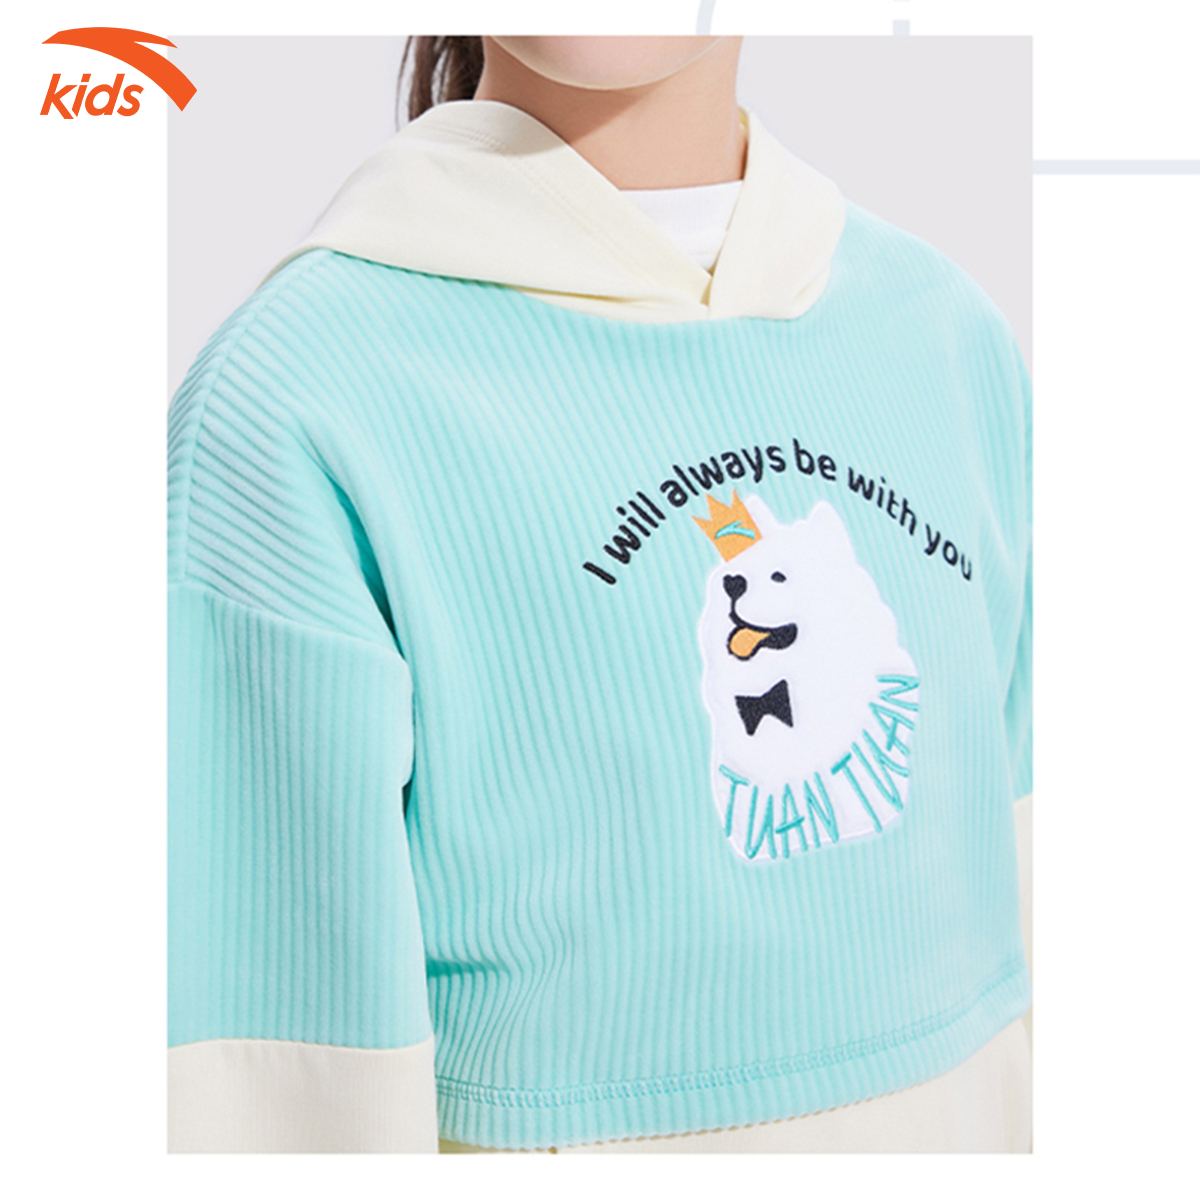 Áo nỉ bé gái Anta Kids kiểu dáng hoodie, chất liệu cao cấp 362248723